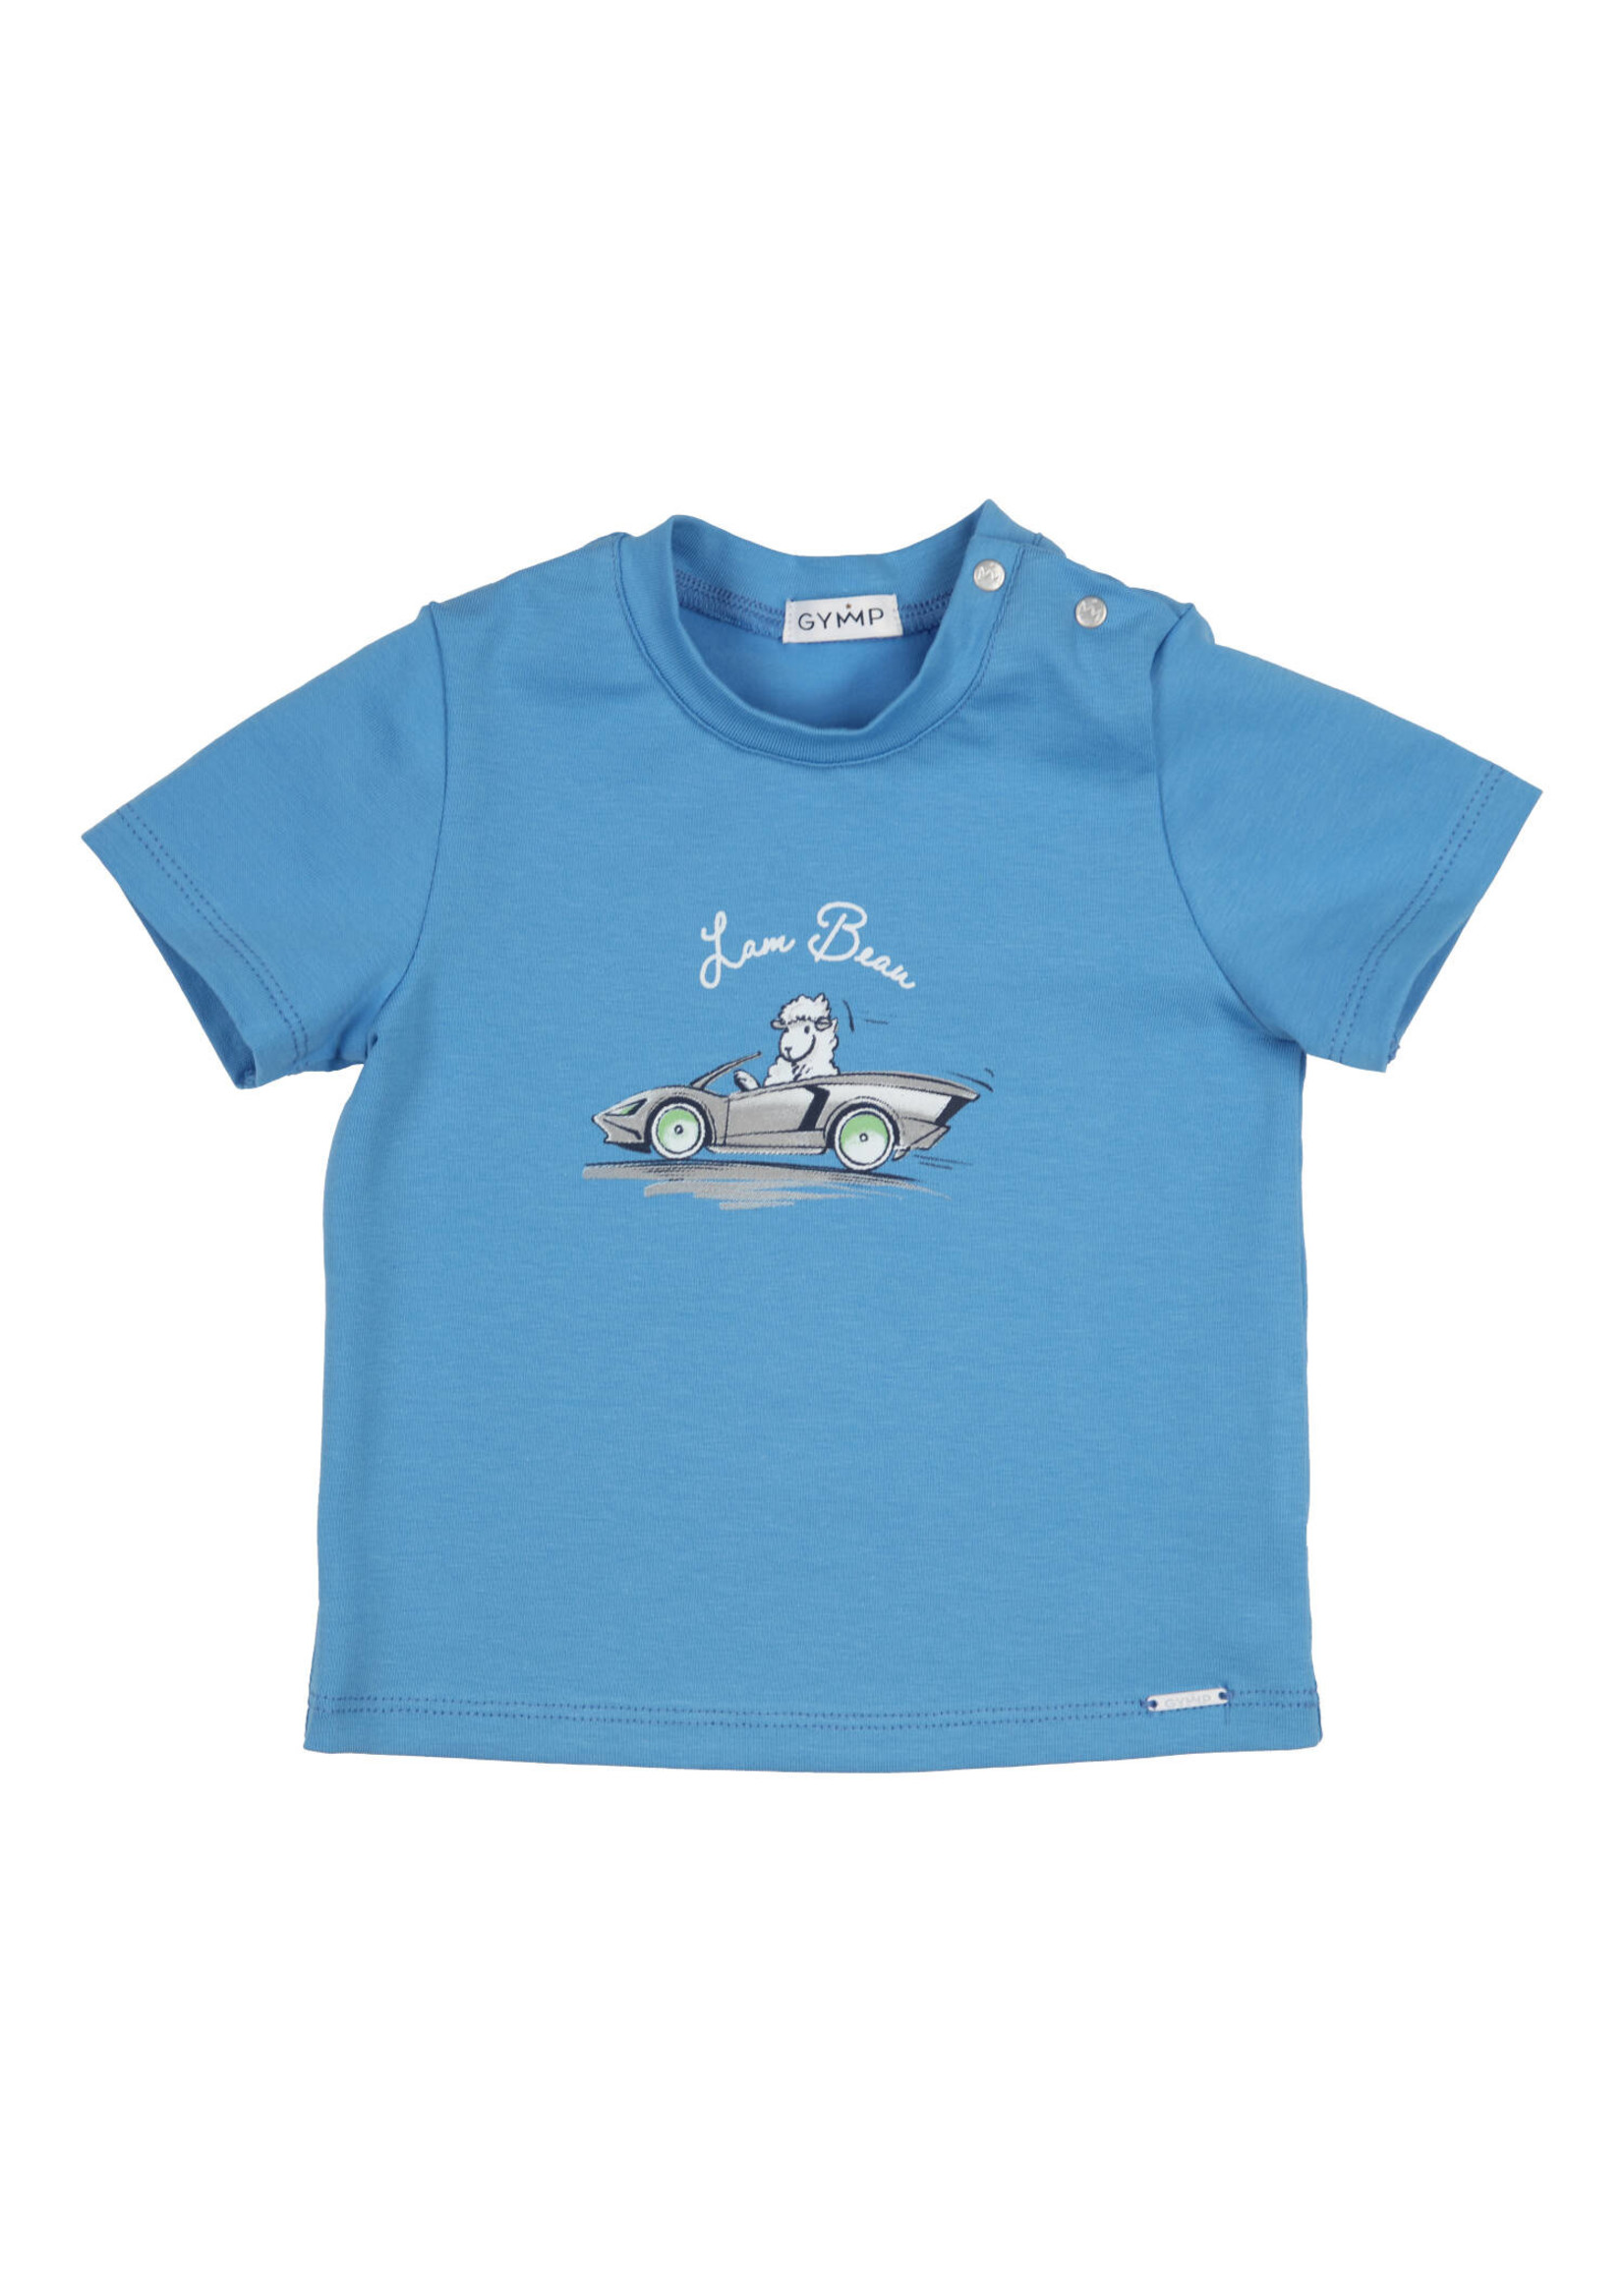 Gymp T-shirt Aerobic Blue 353-3325-20